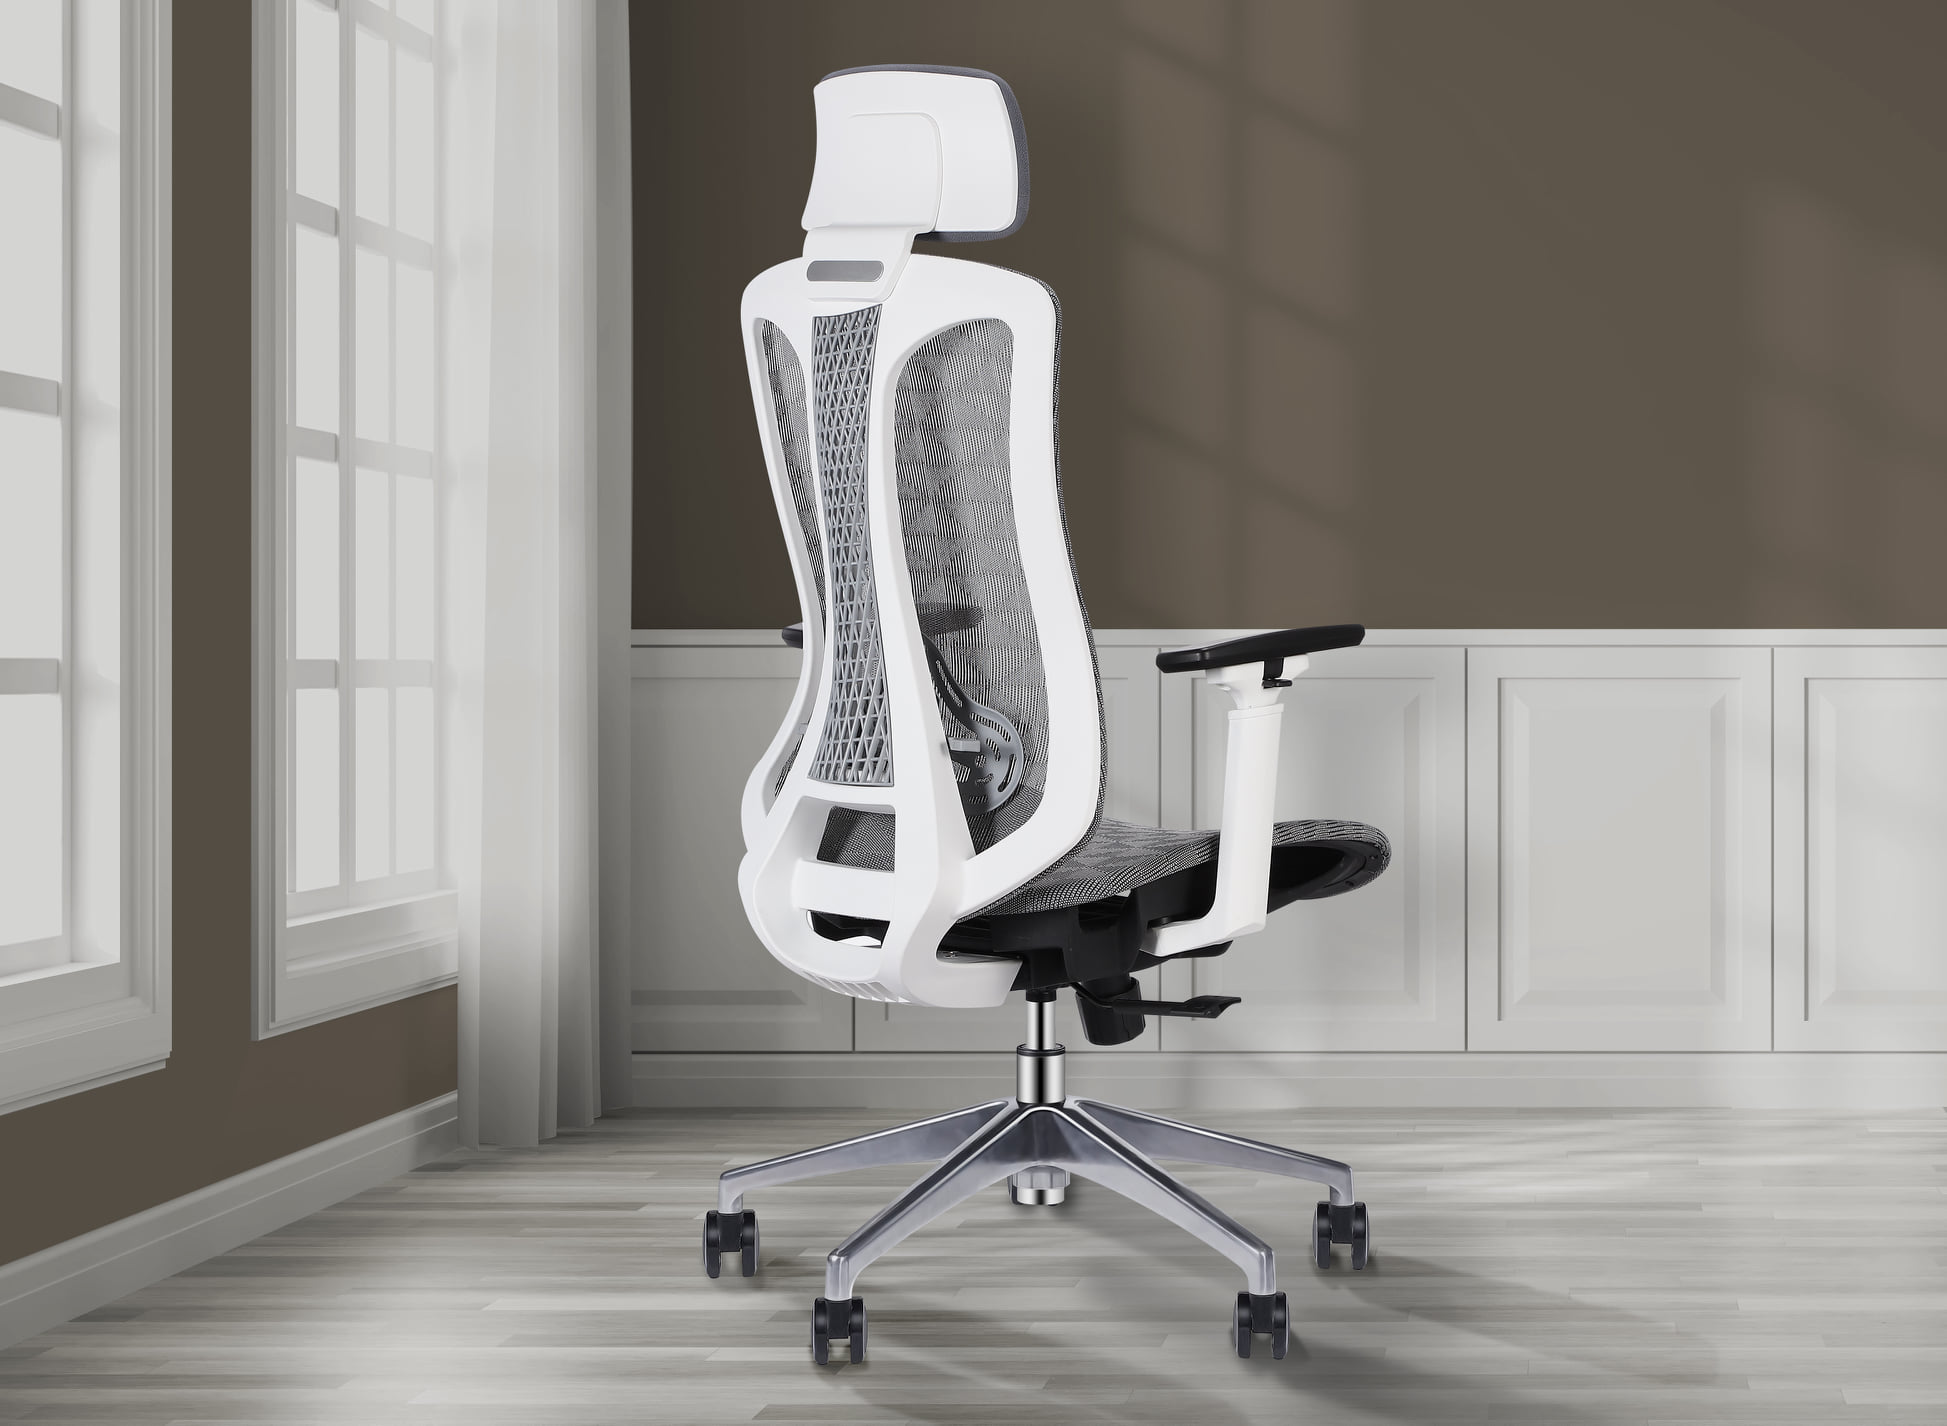 Logicfox Ergonomic Office Chair: Saddle-shaped Mesh Seat